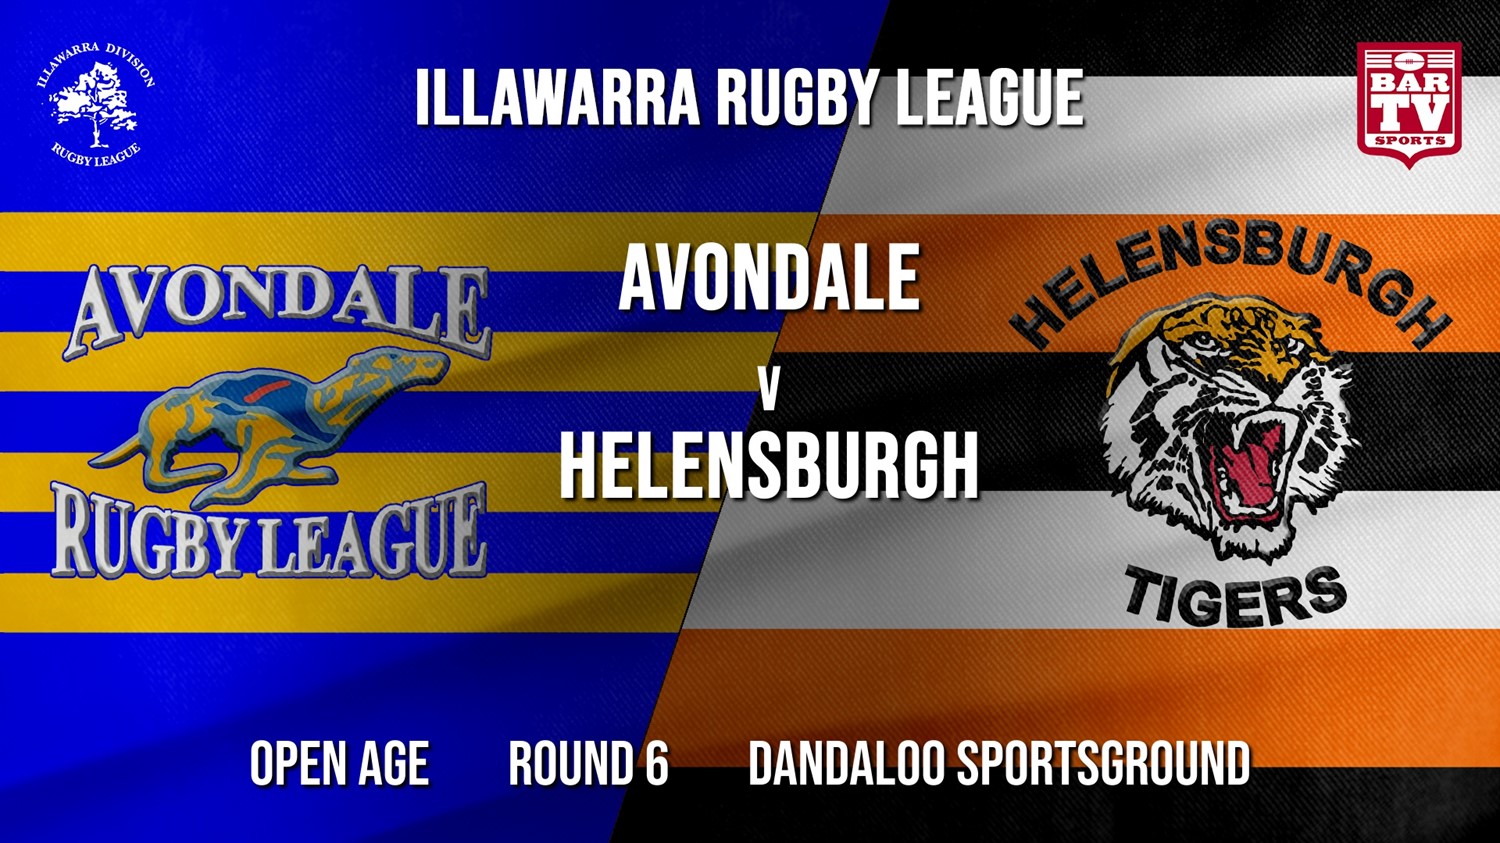 IRL Round 6 - Open Age - Avondale RLFC v Helensburgh Tigers Minigame Slate Image